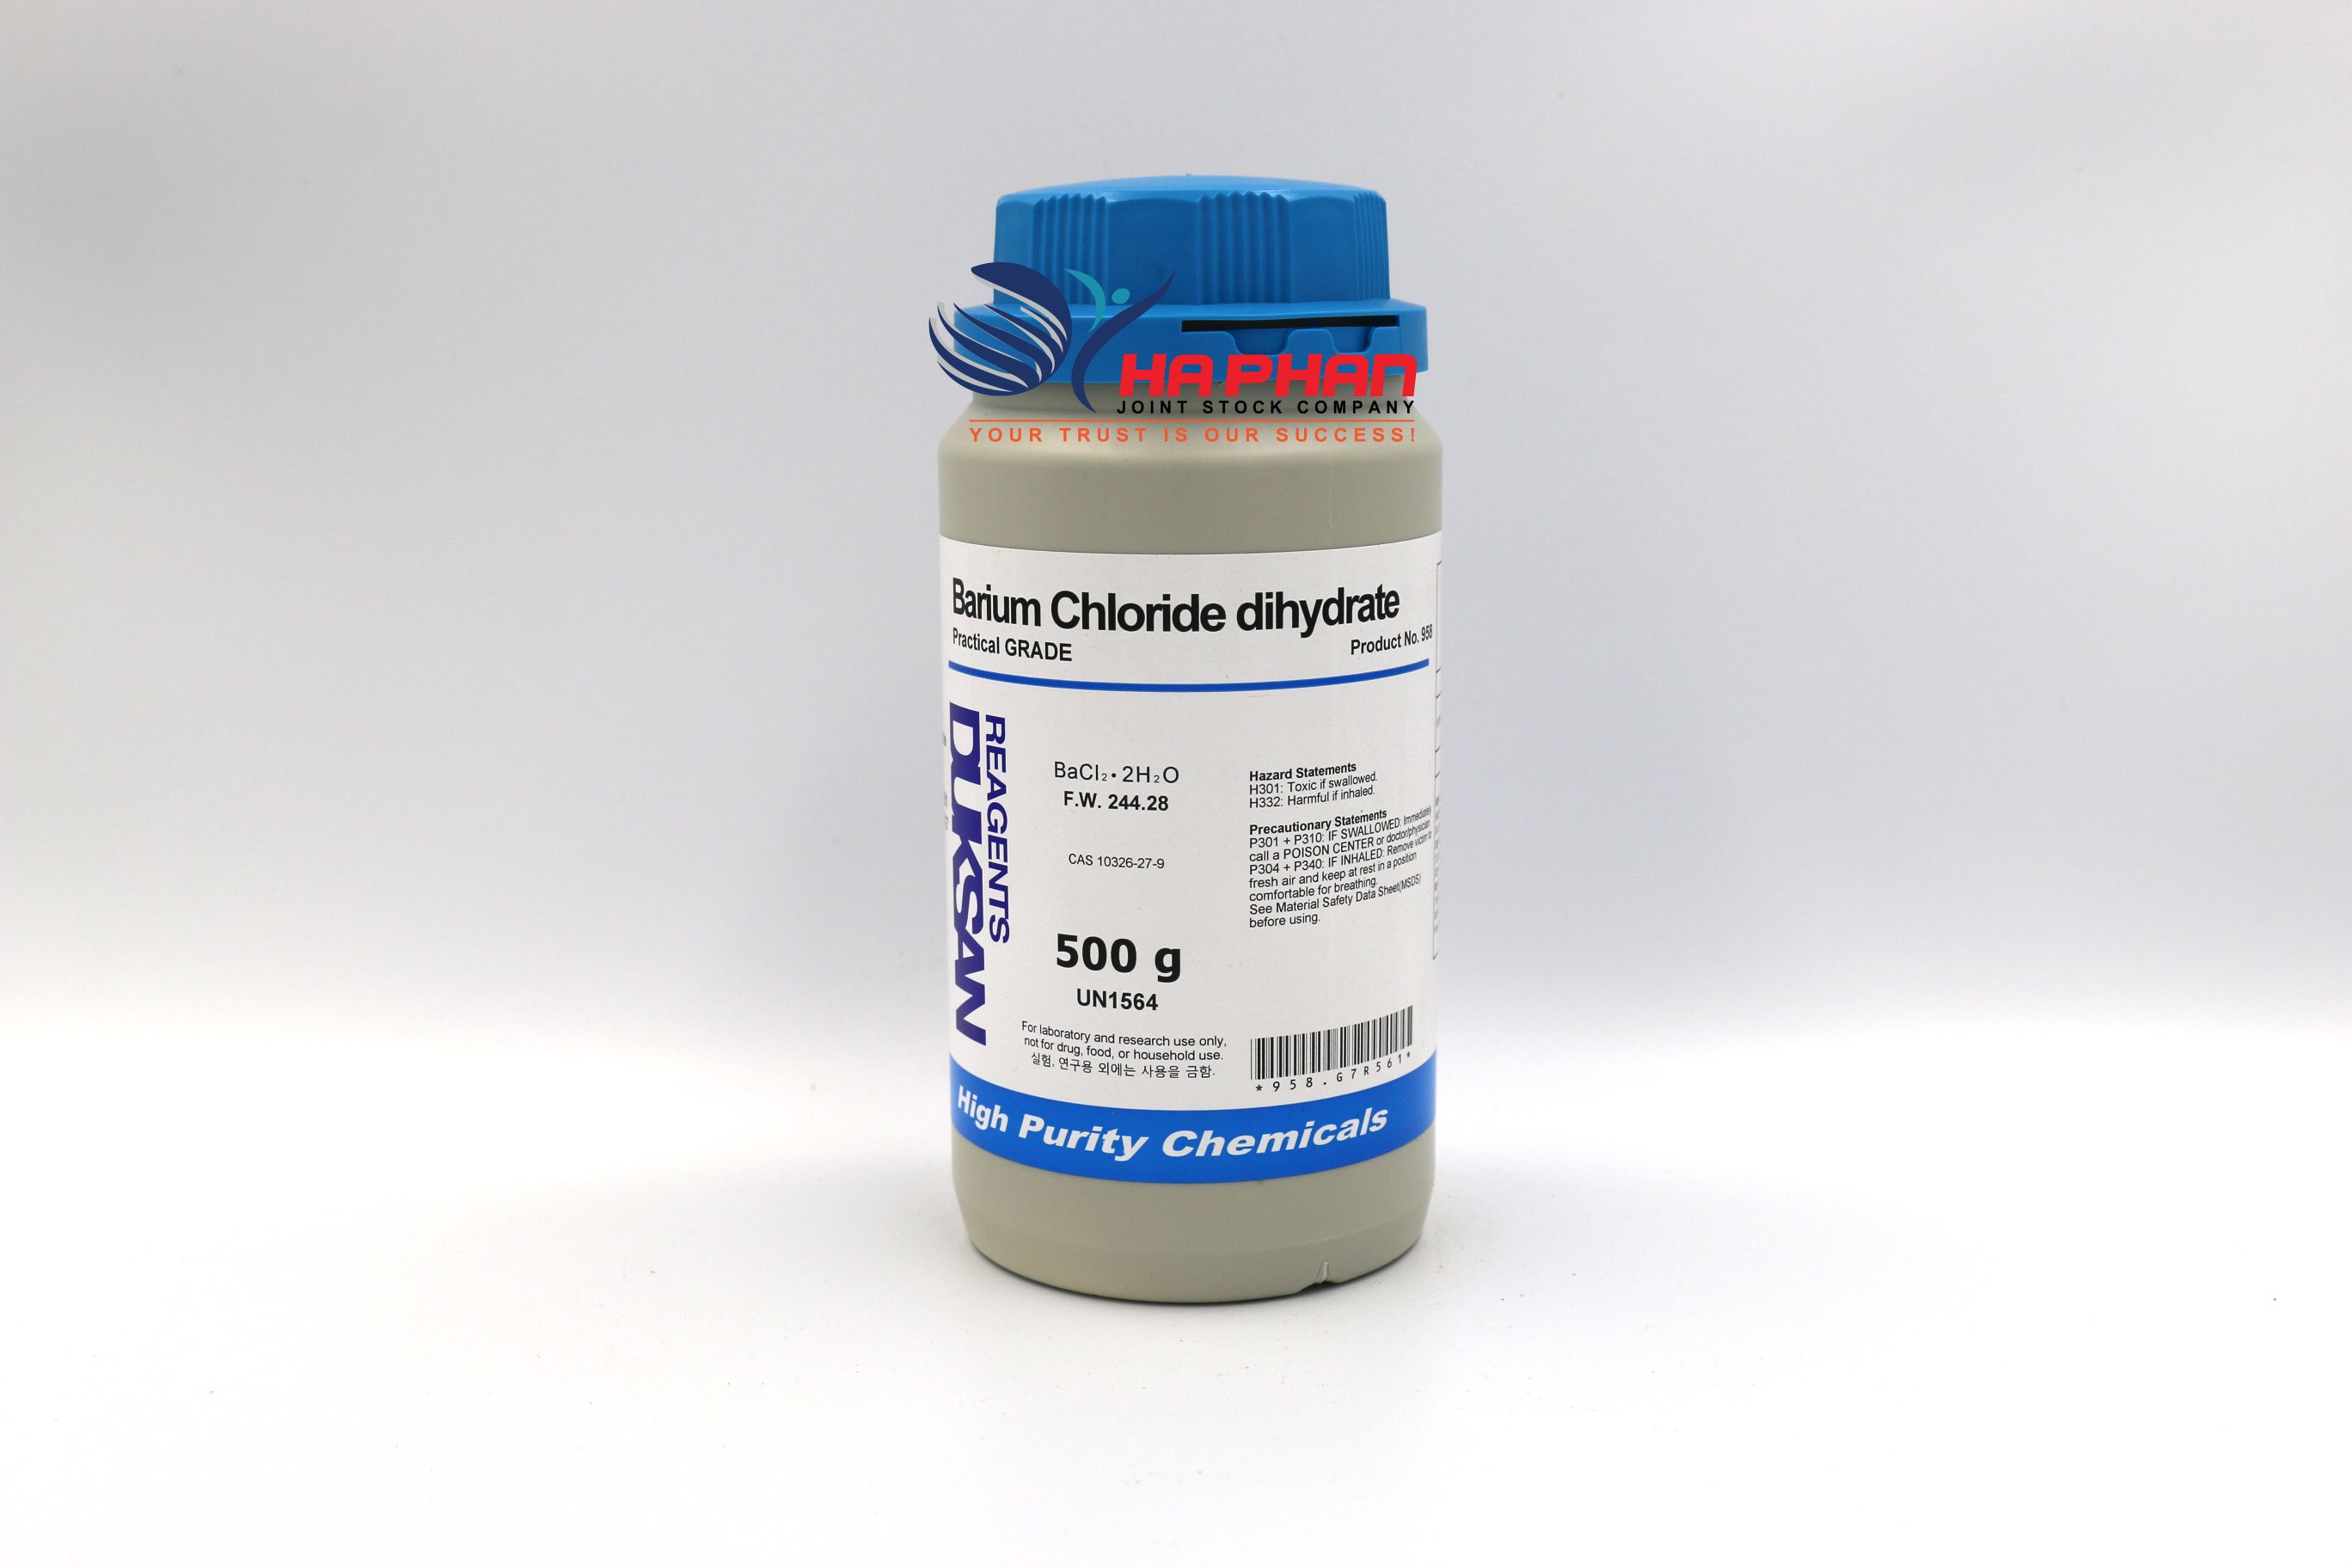 Barium Chloride dihydrate